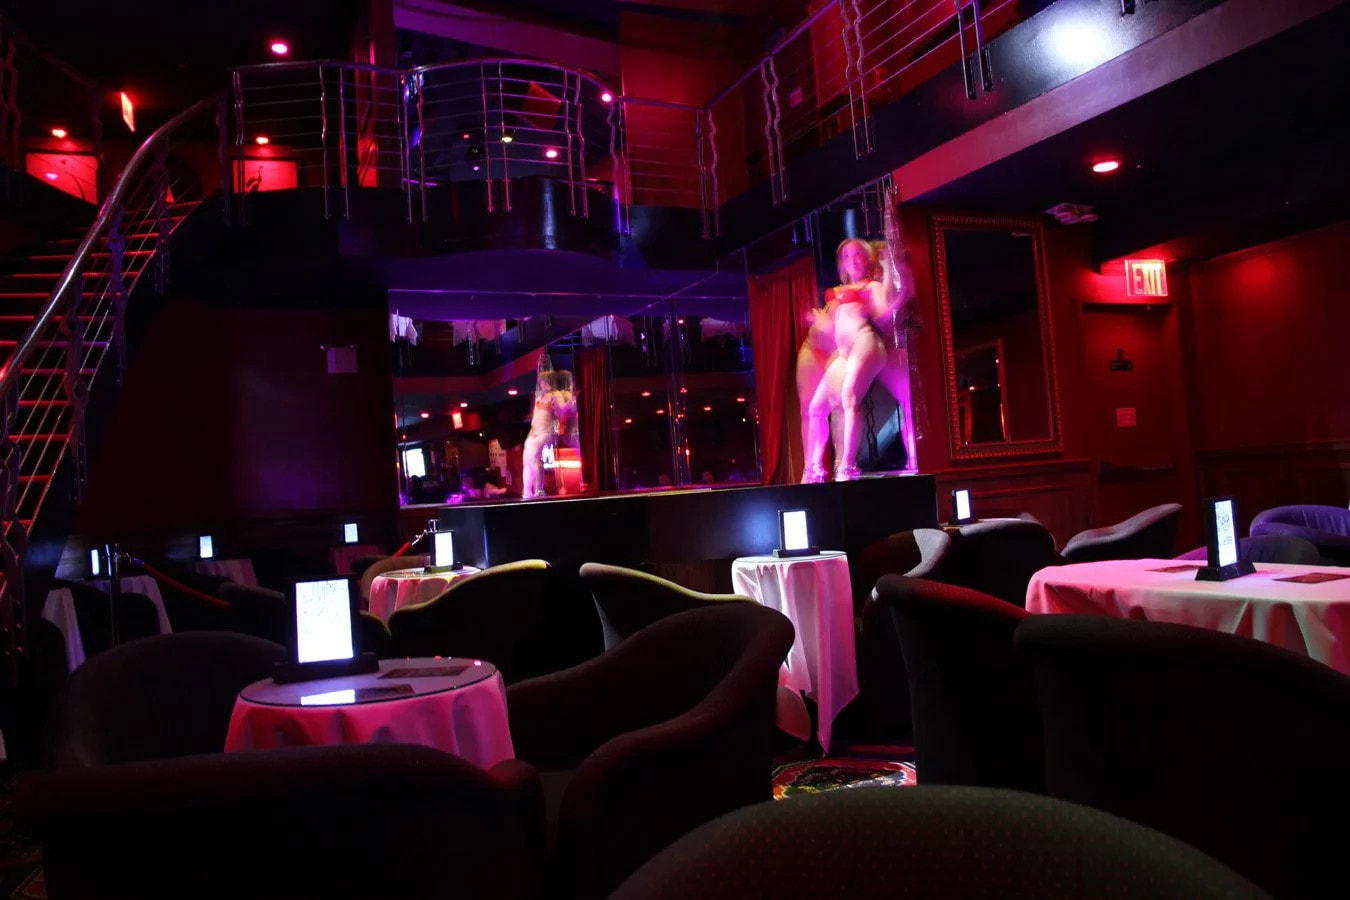 Strip Club New York, New York Loses Liquor License Appeal